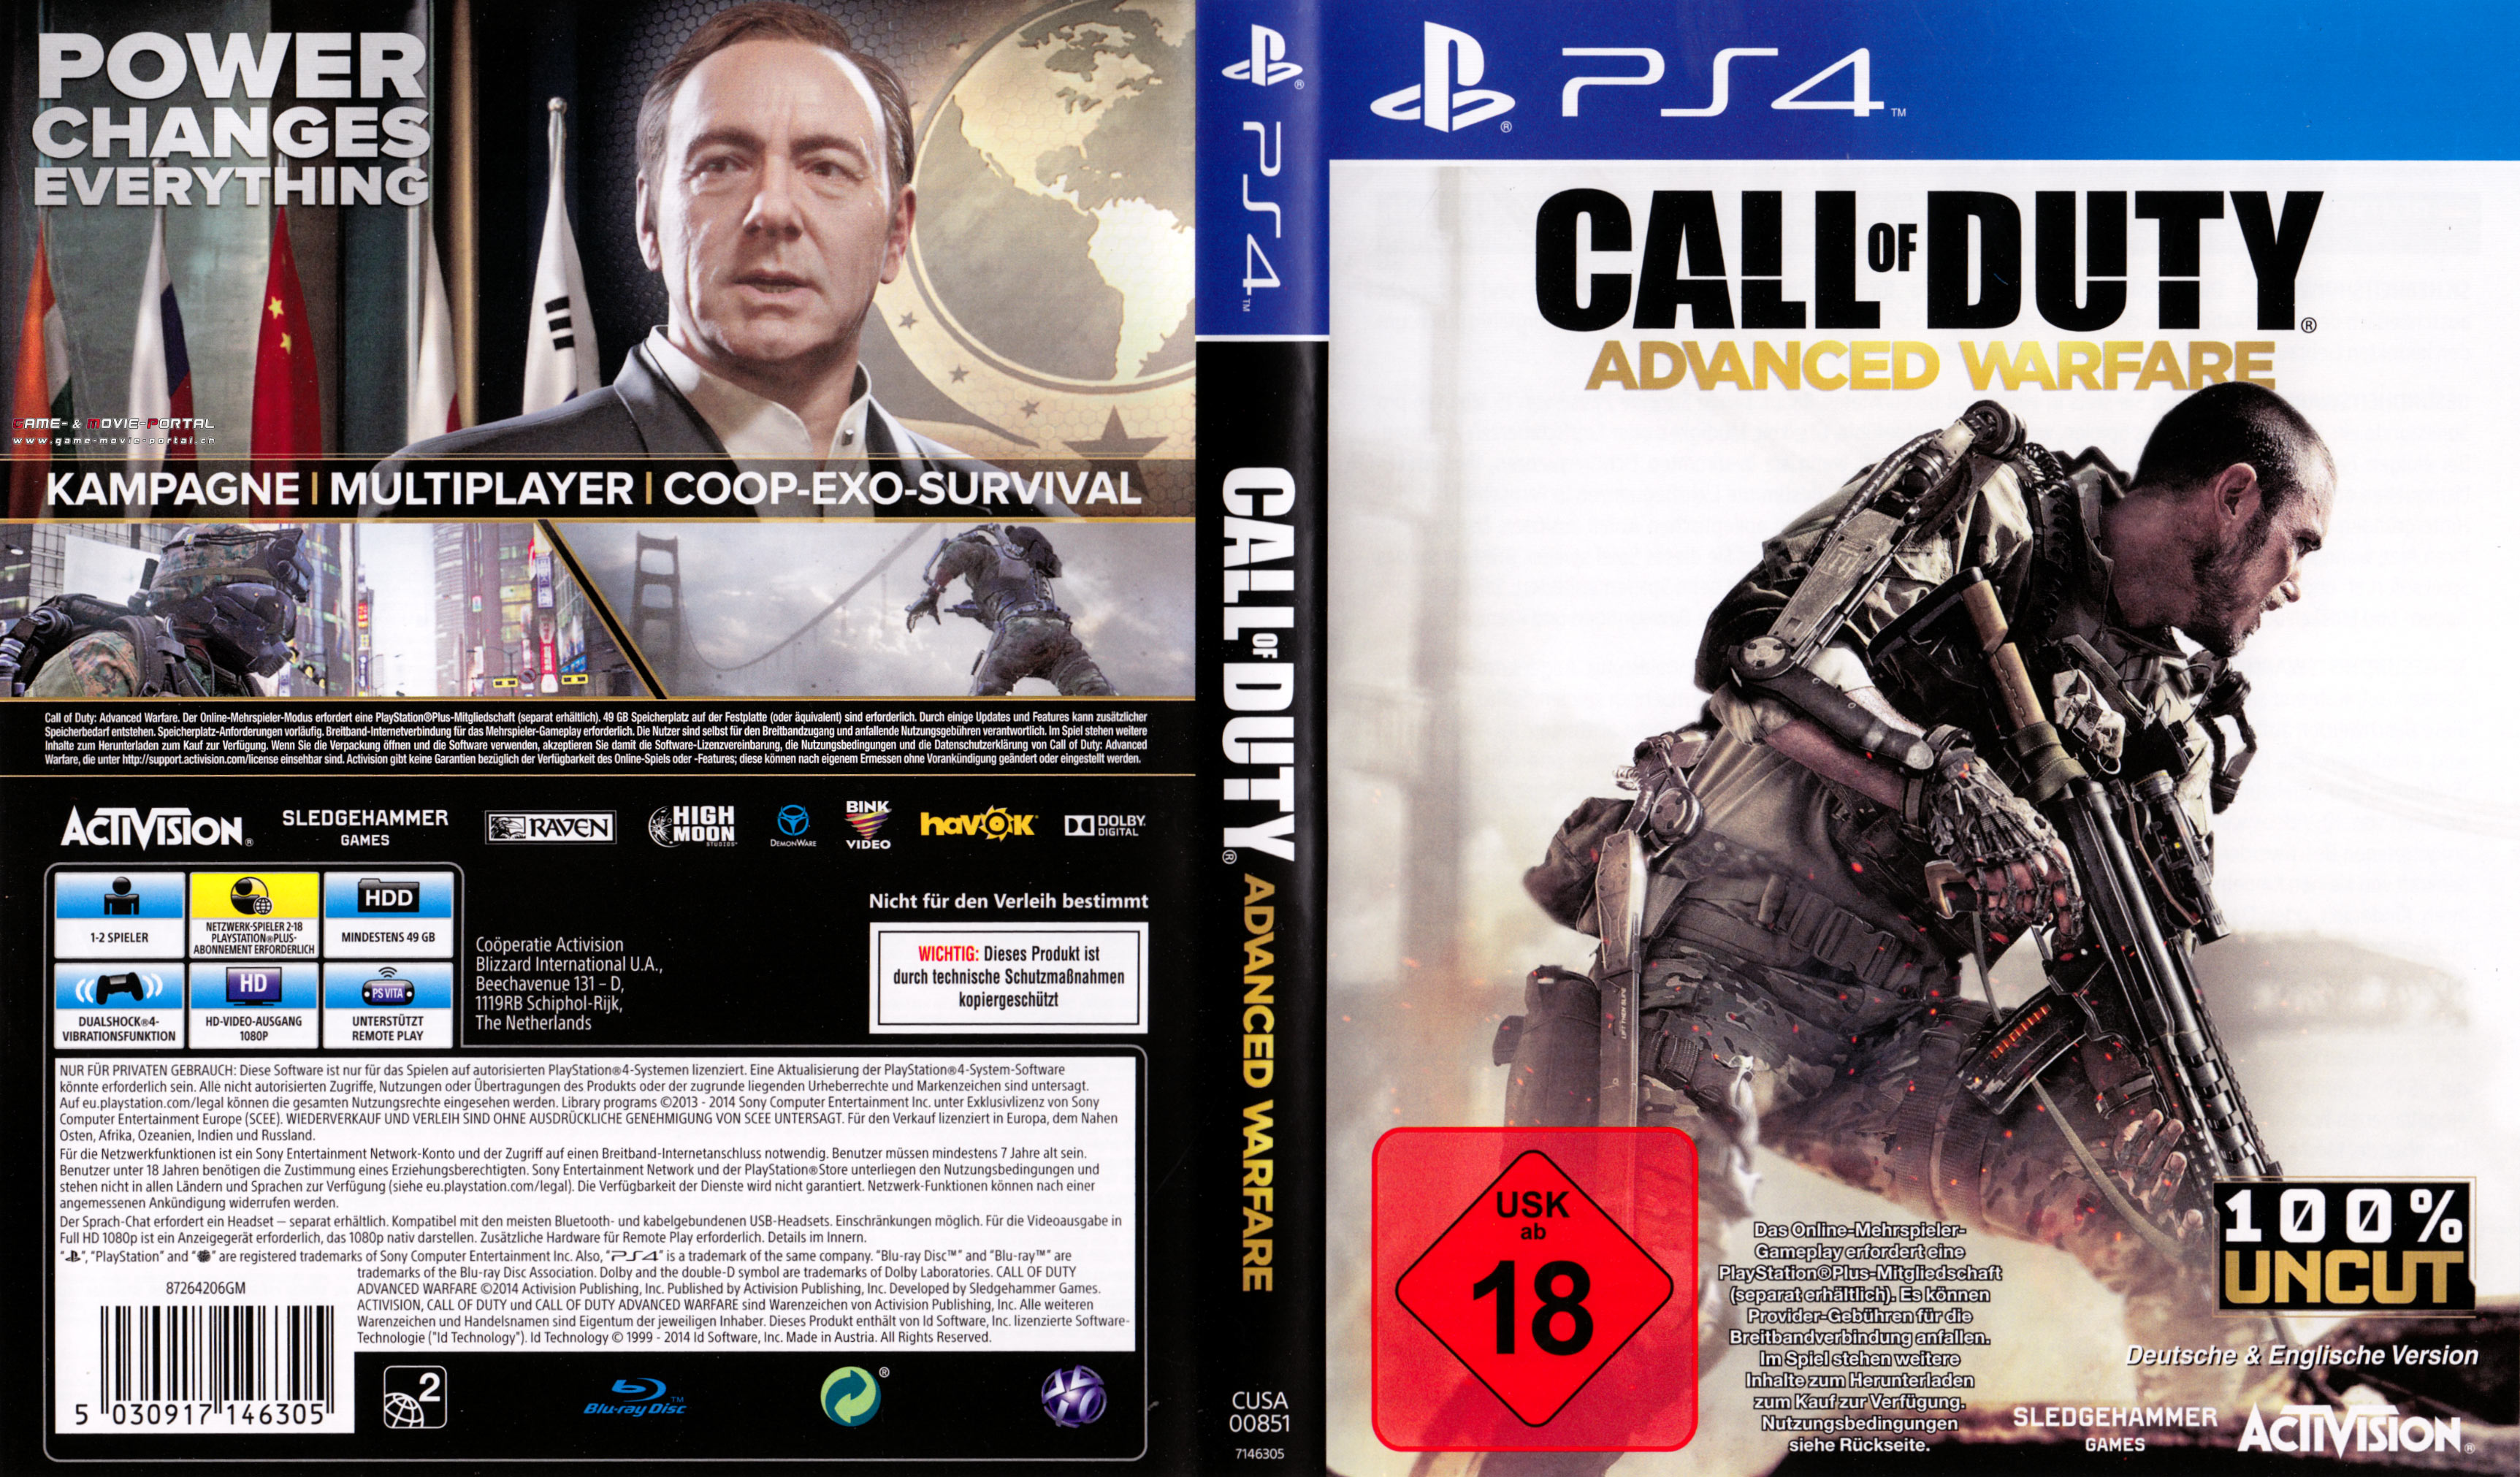 Call of duty adventure. Call of Duty Advanced Warfare ps4 диск. Call of Duty Advanced Warfare на ПС 4. Call of Duty Advanced Warfare ps4 обложка. Call of Duty Advanced Warfare ps3 обложка.